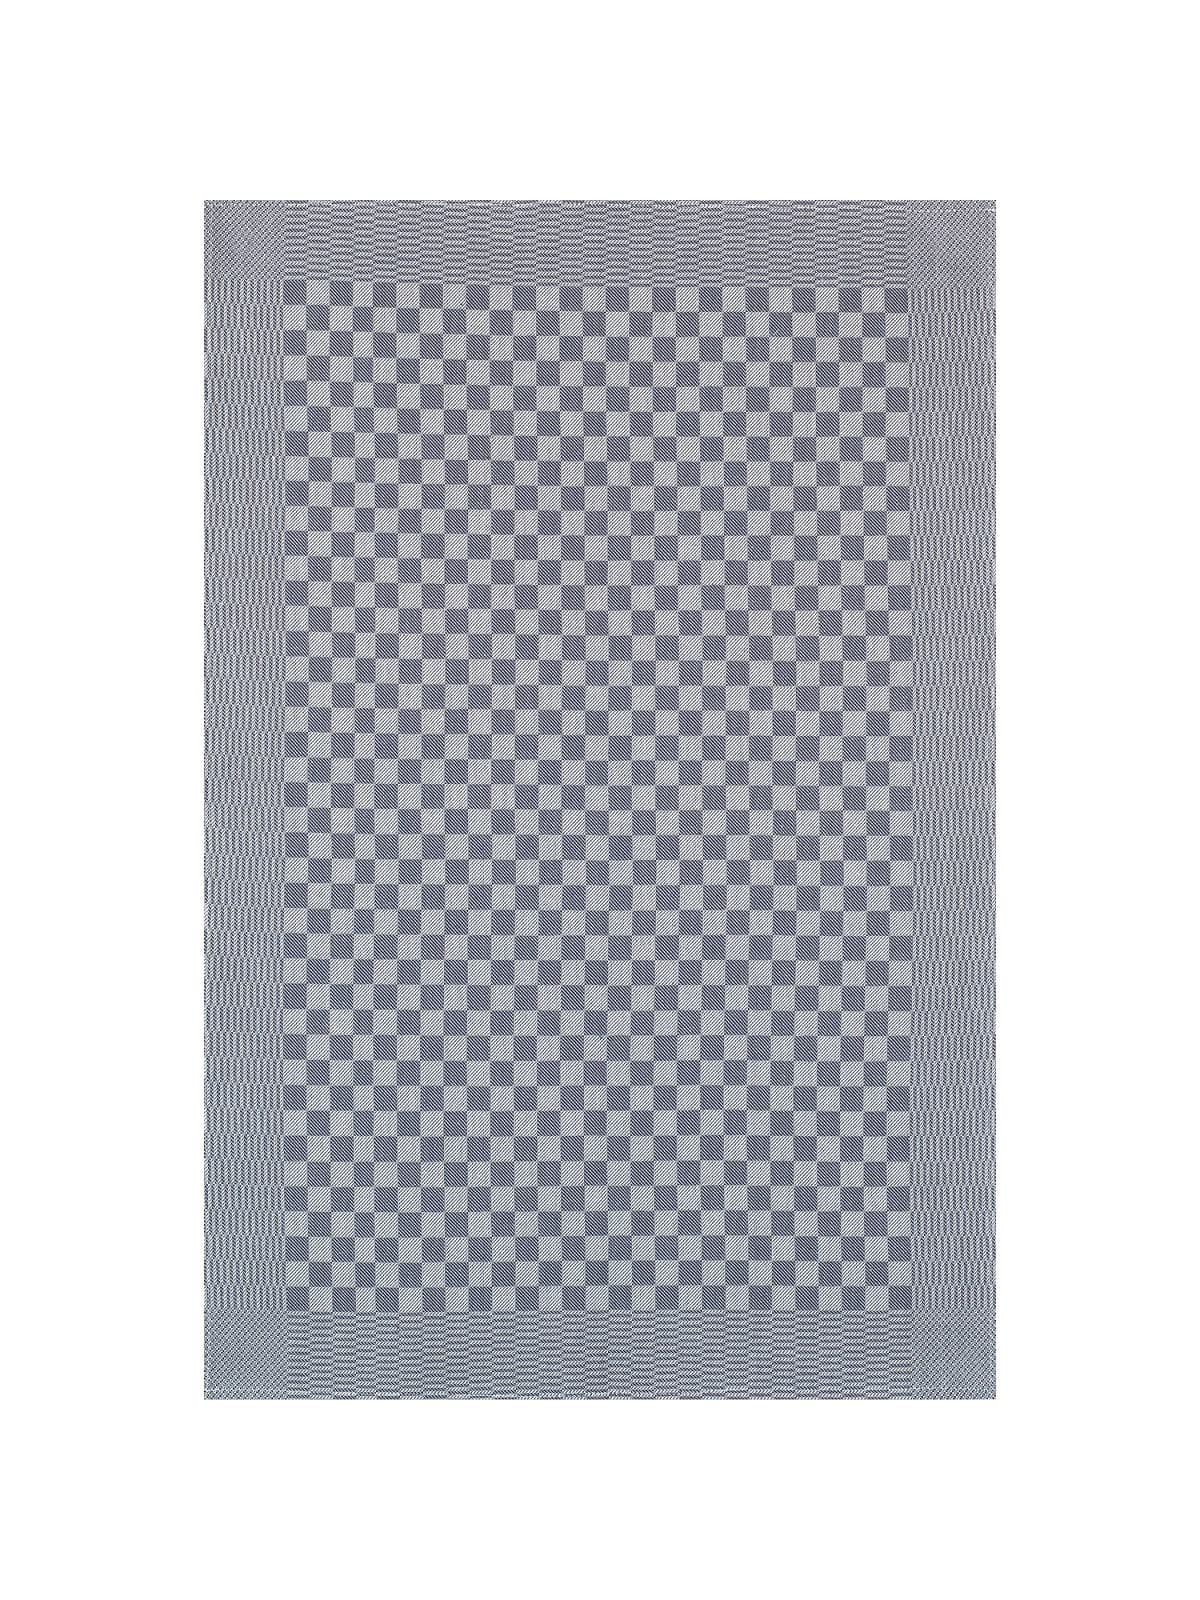 Pit Towel Grey - 12 Pcs by Kitchen & Table Linens -  ChefsCotton